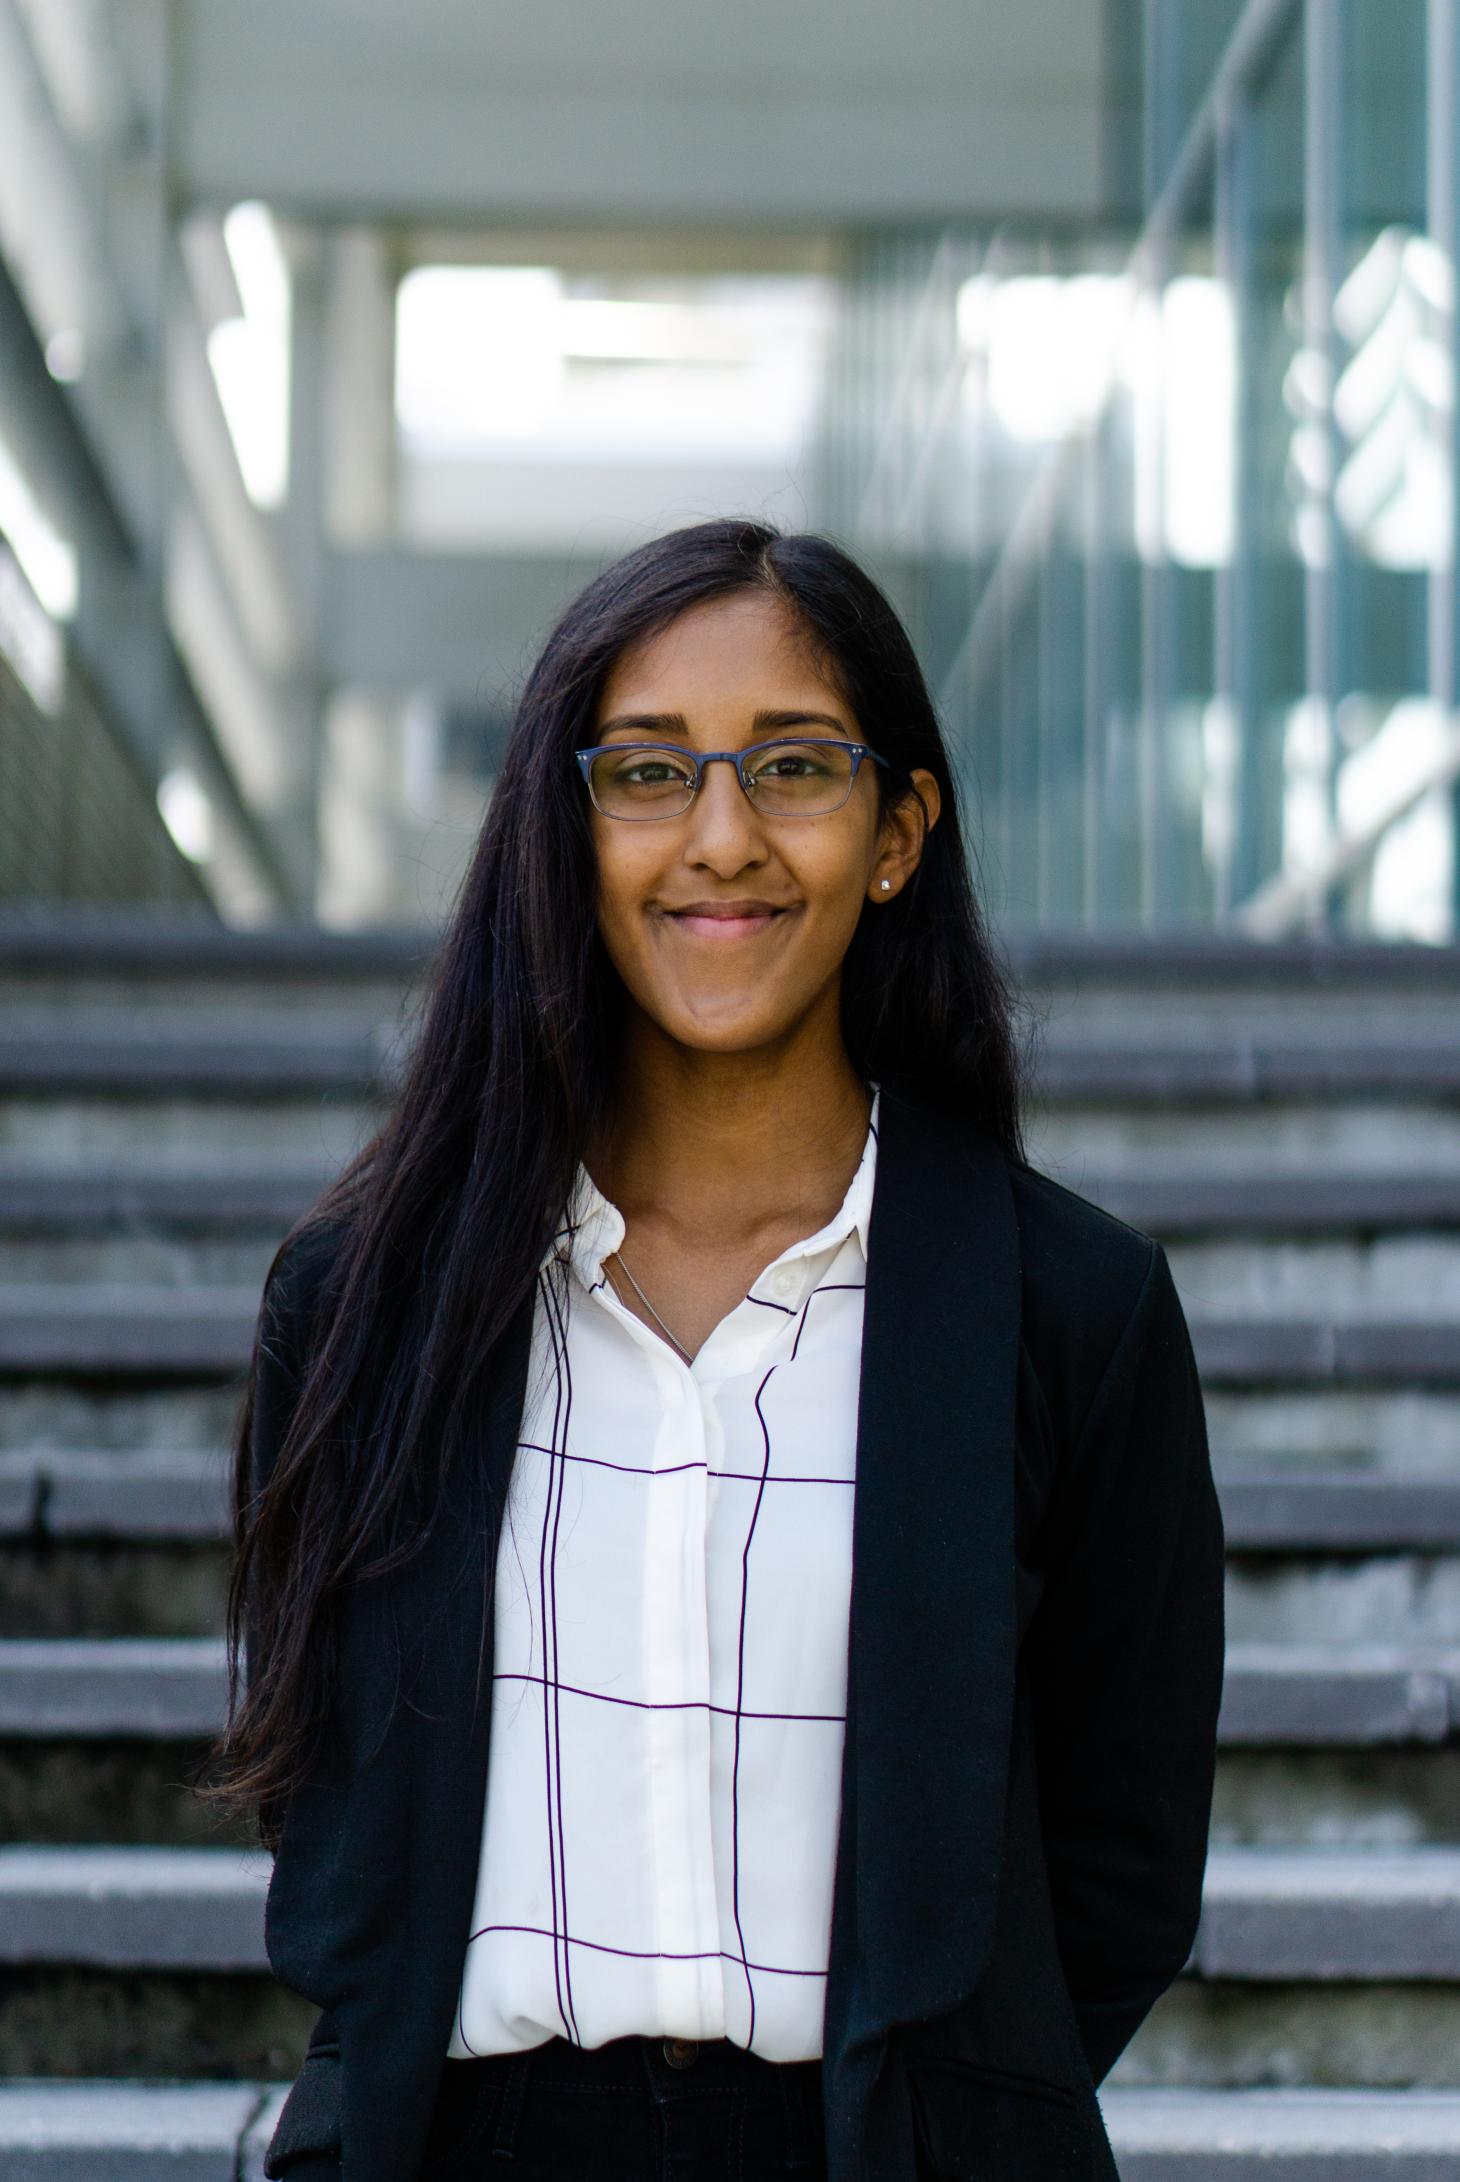 Oregon State Microbiology Grad Student Nilanjana Das posing for a portrait photo